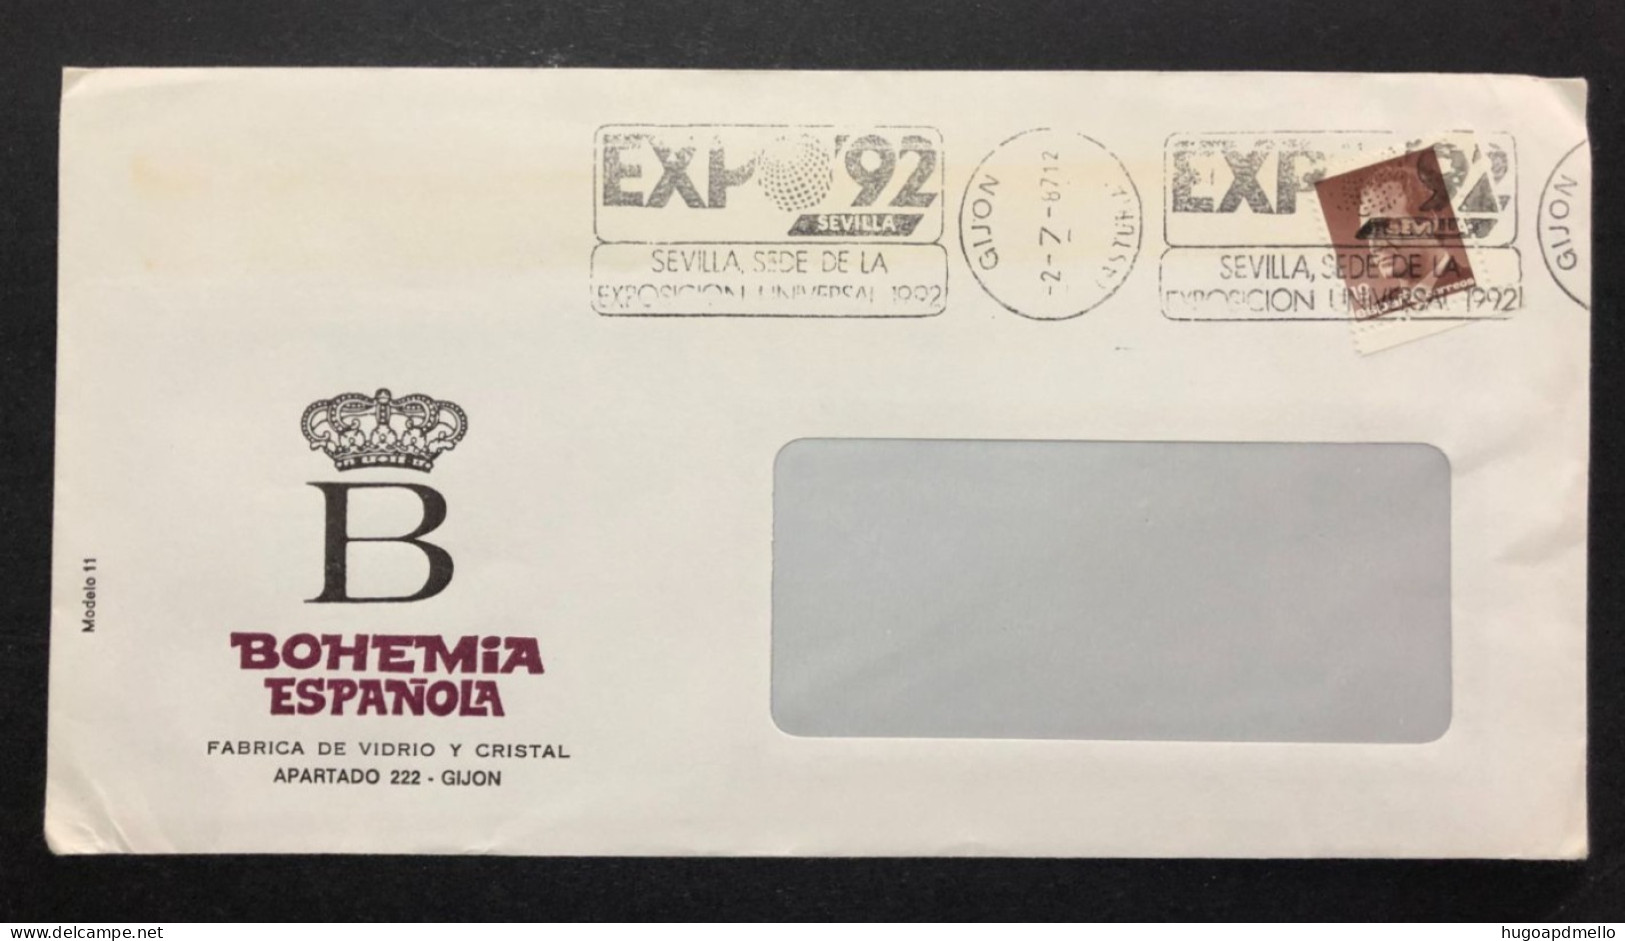 SPAIN, Cover With Special Cancellation « EXPO '92 », « GIJON Postmark », 1987 - 1992 – Siviglia (Spagna)